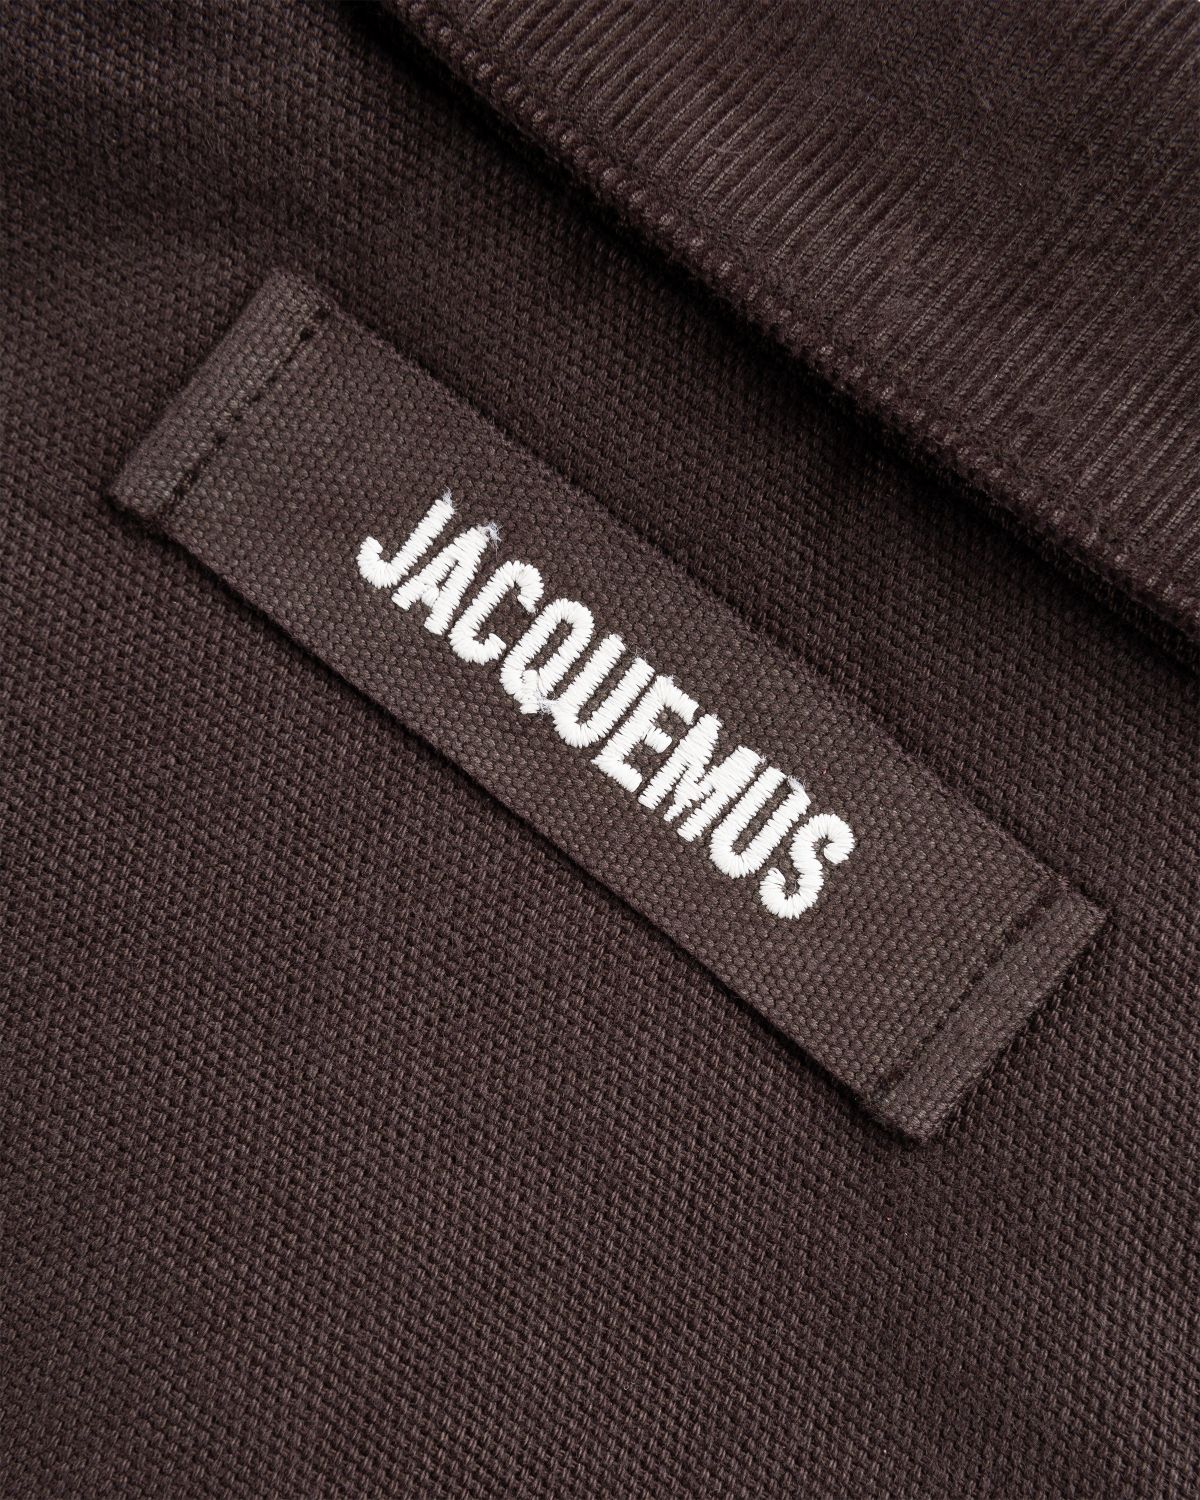 JACQUEMUS – Le Blouson Trivela Dark Brown - Outerwear - Brown - Image 6